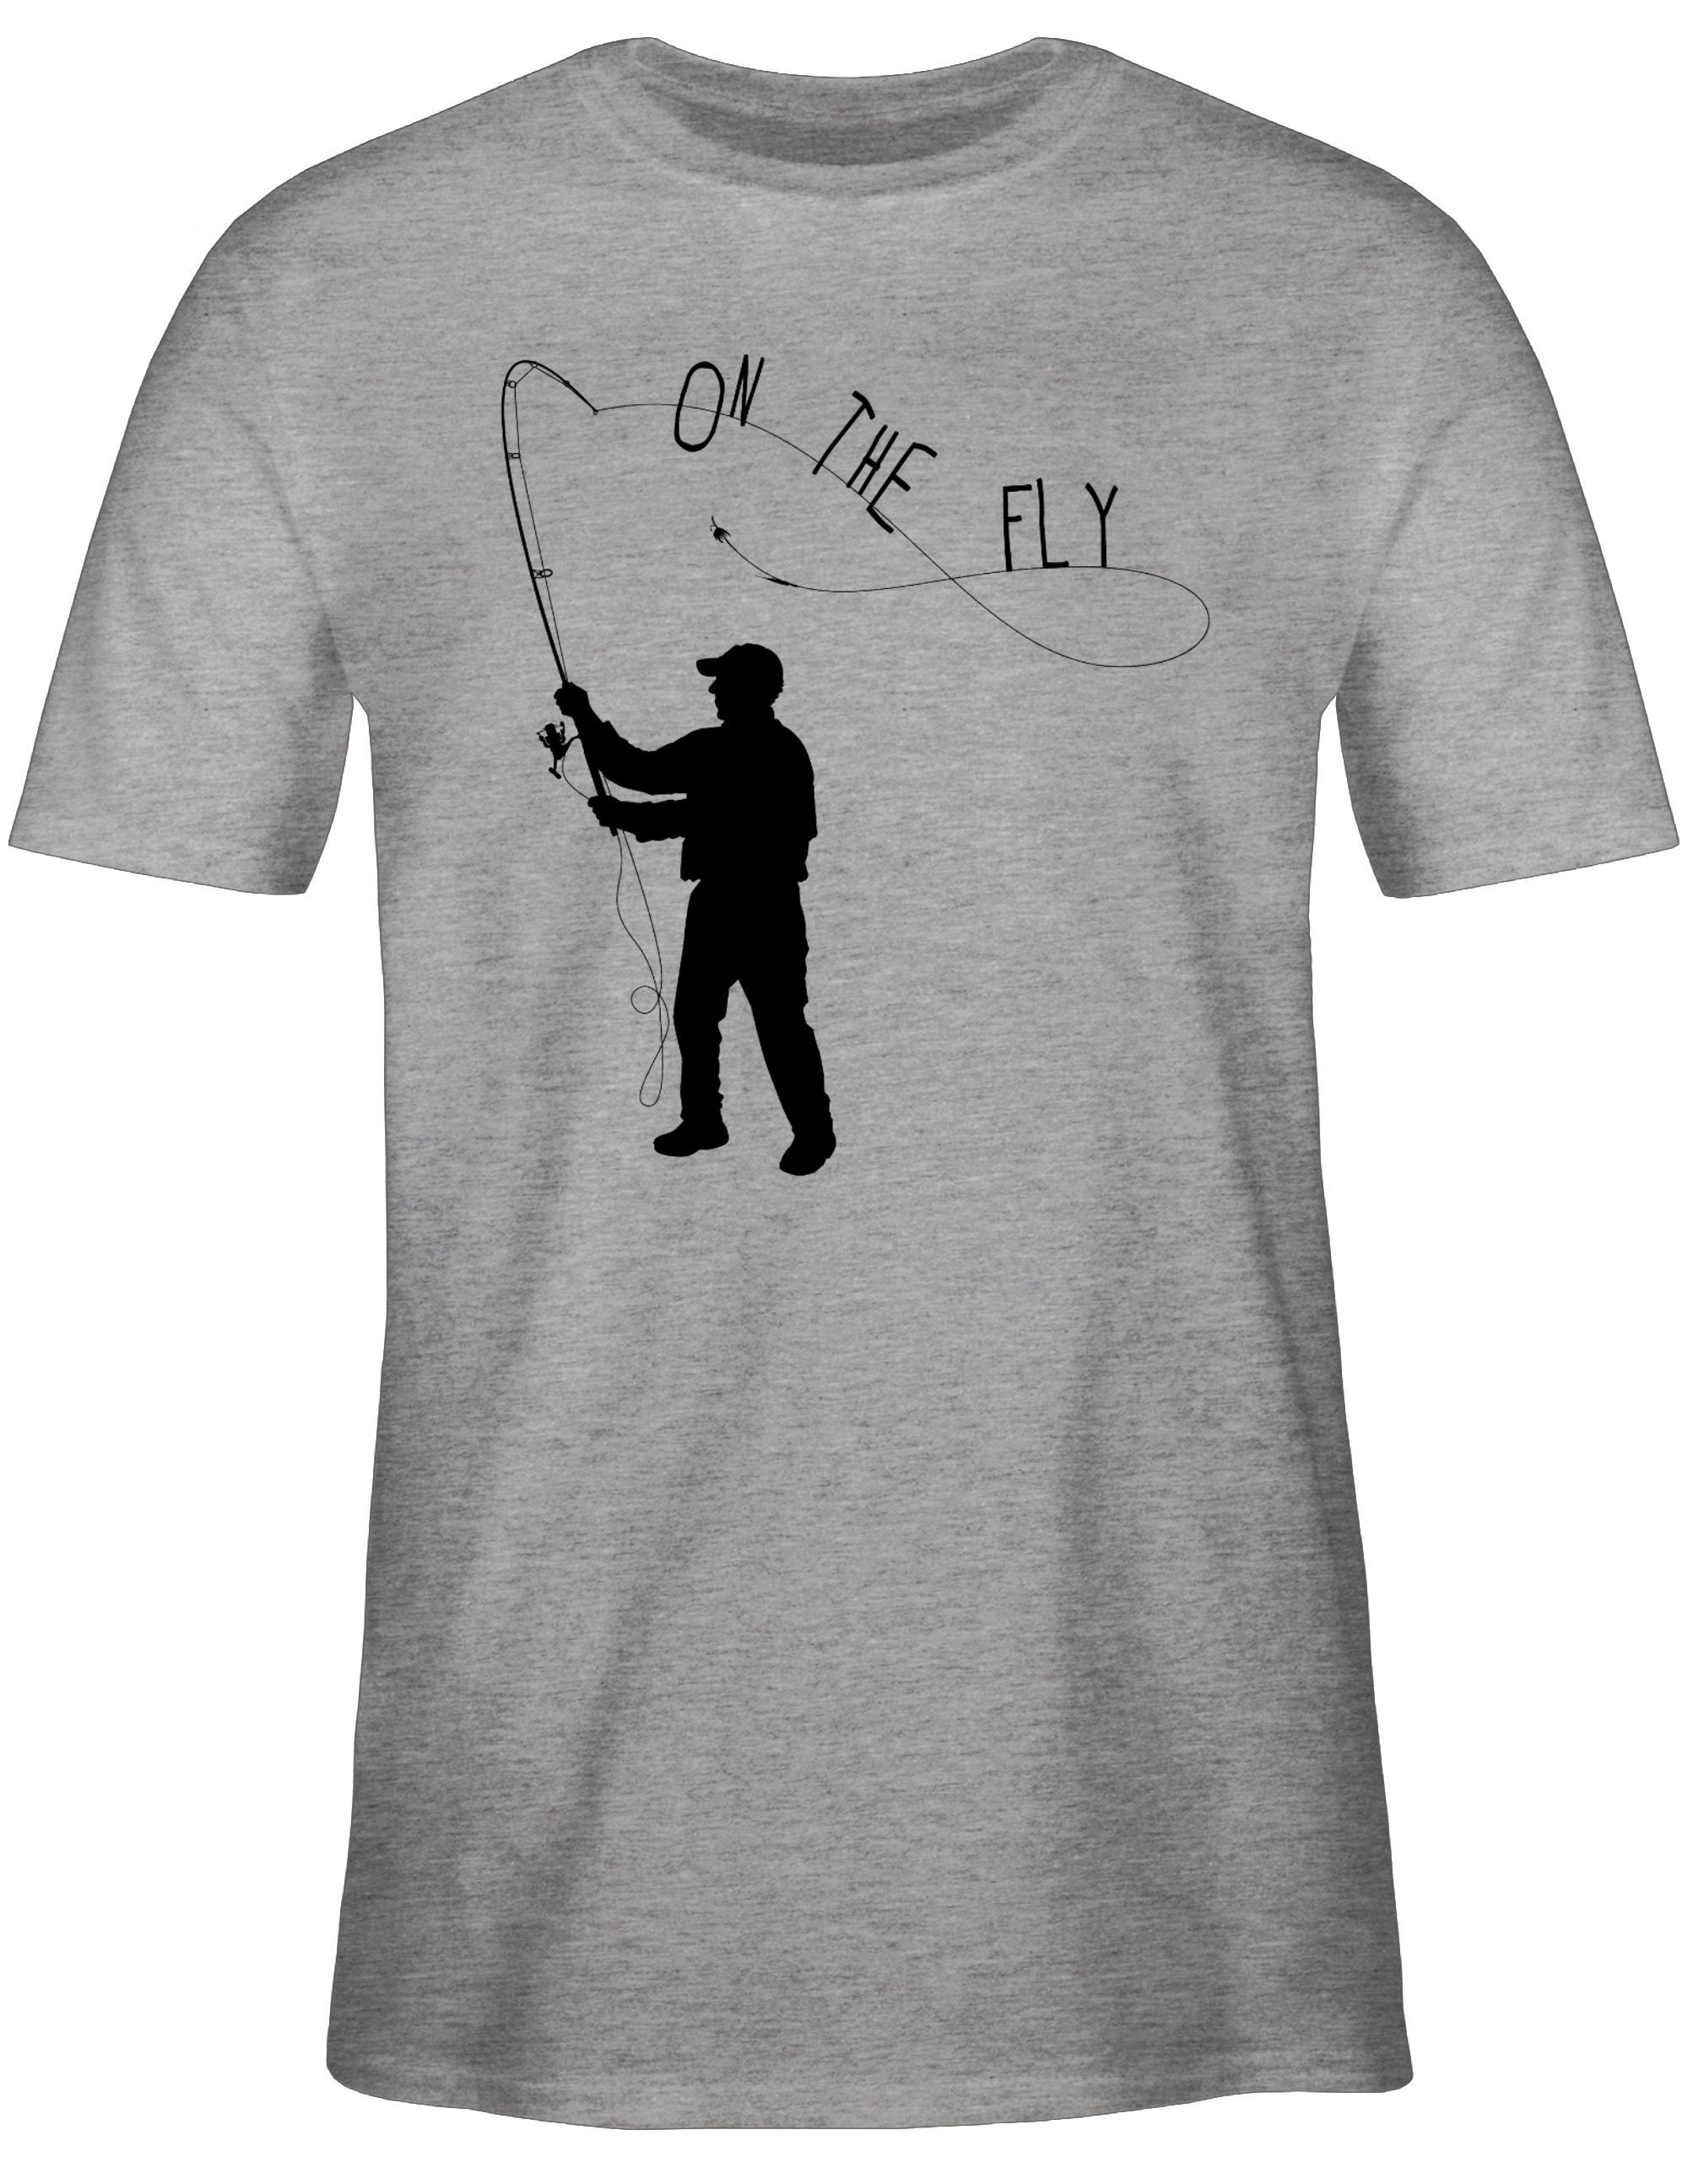 Grau On T-Shirt Shirtracer Fishing - Fly meliert Angler 3 the Geschenke